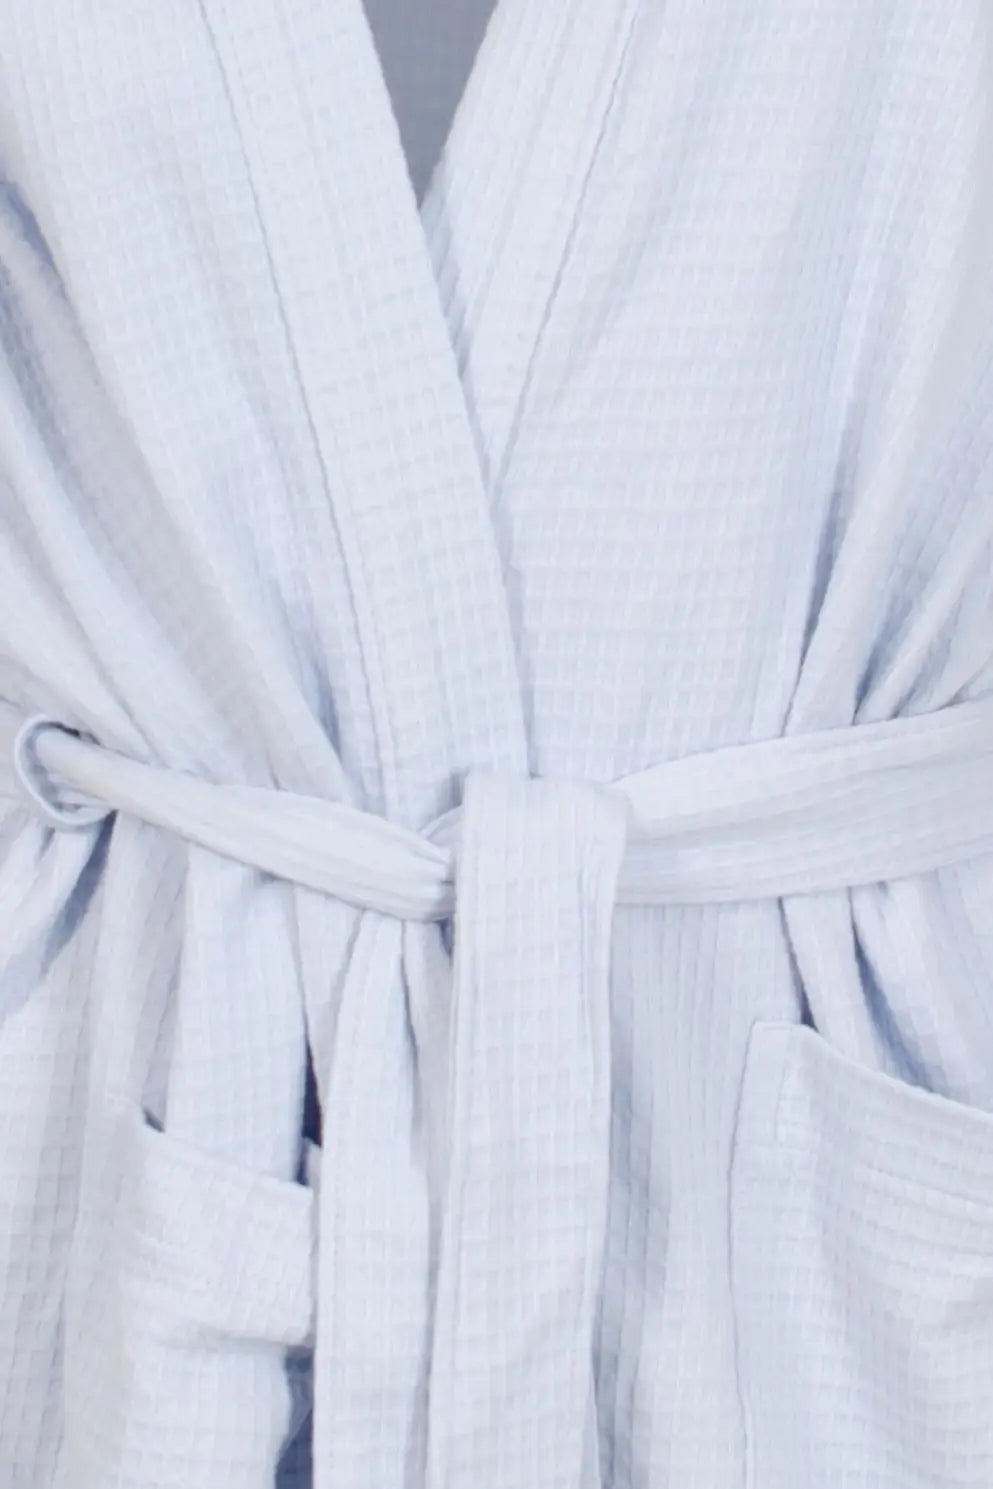 Kimono Robe|Hand Block Print|EeshaBoutique|Sustainable Ethical Fashion